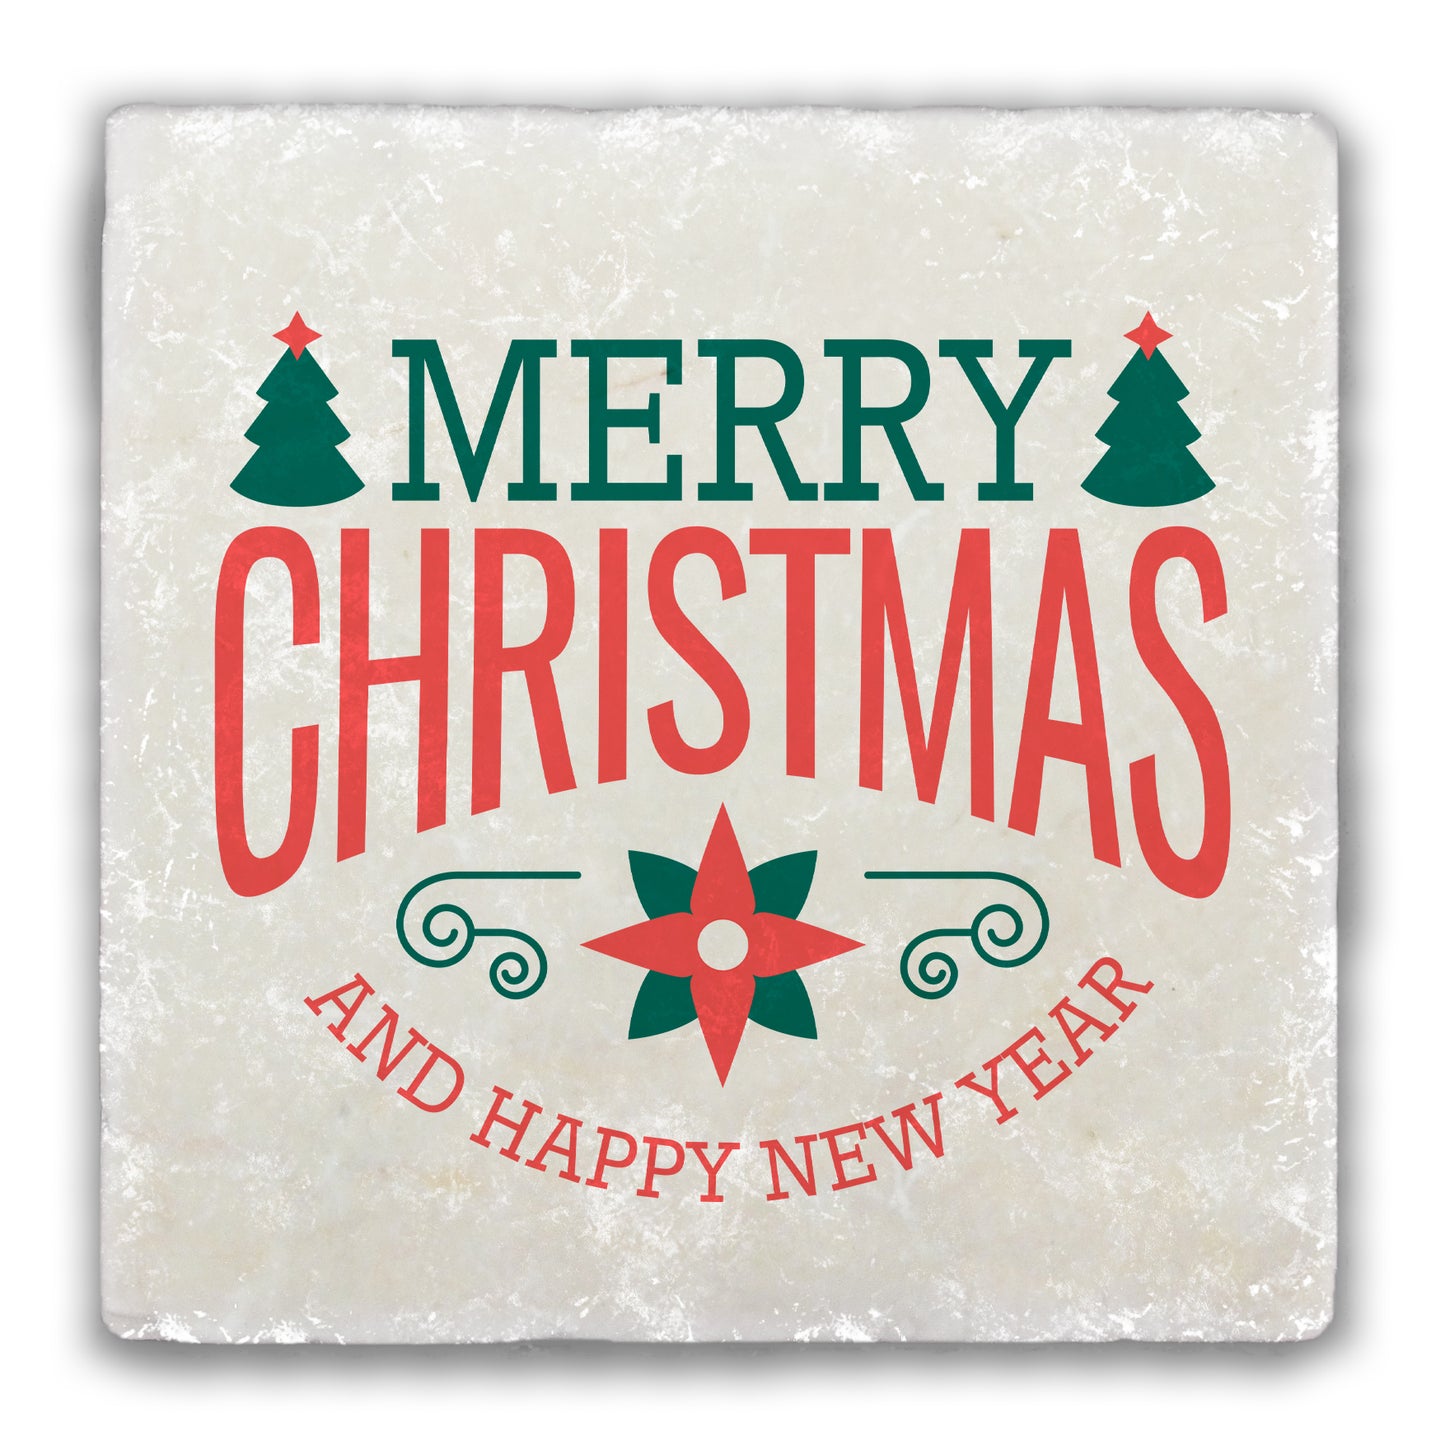 Merry Christmas & Happy New Year Tumbled Stone Coaster